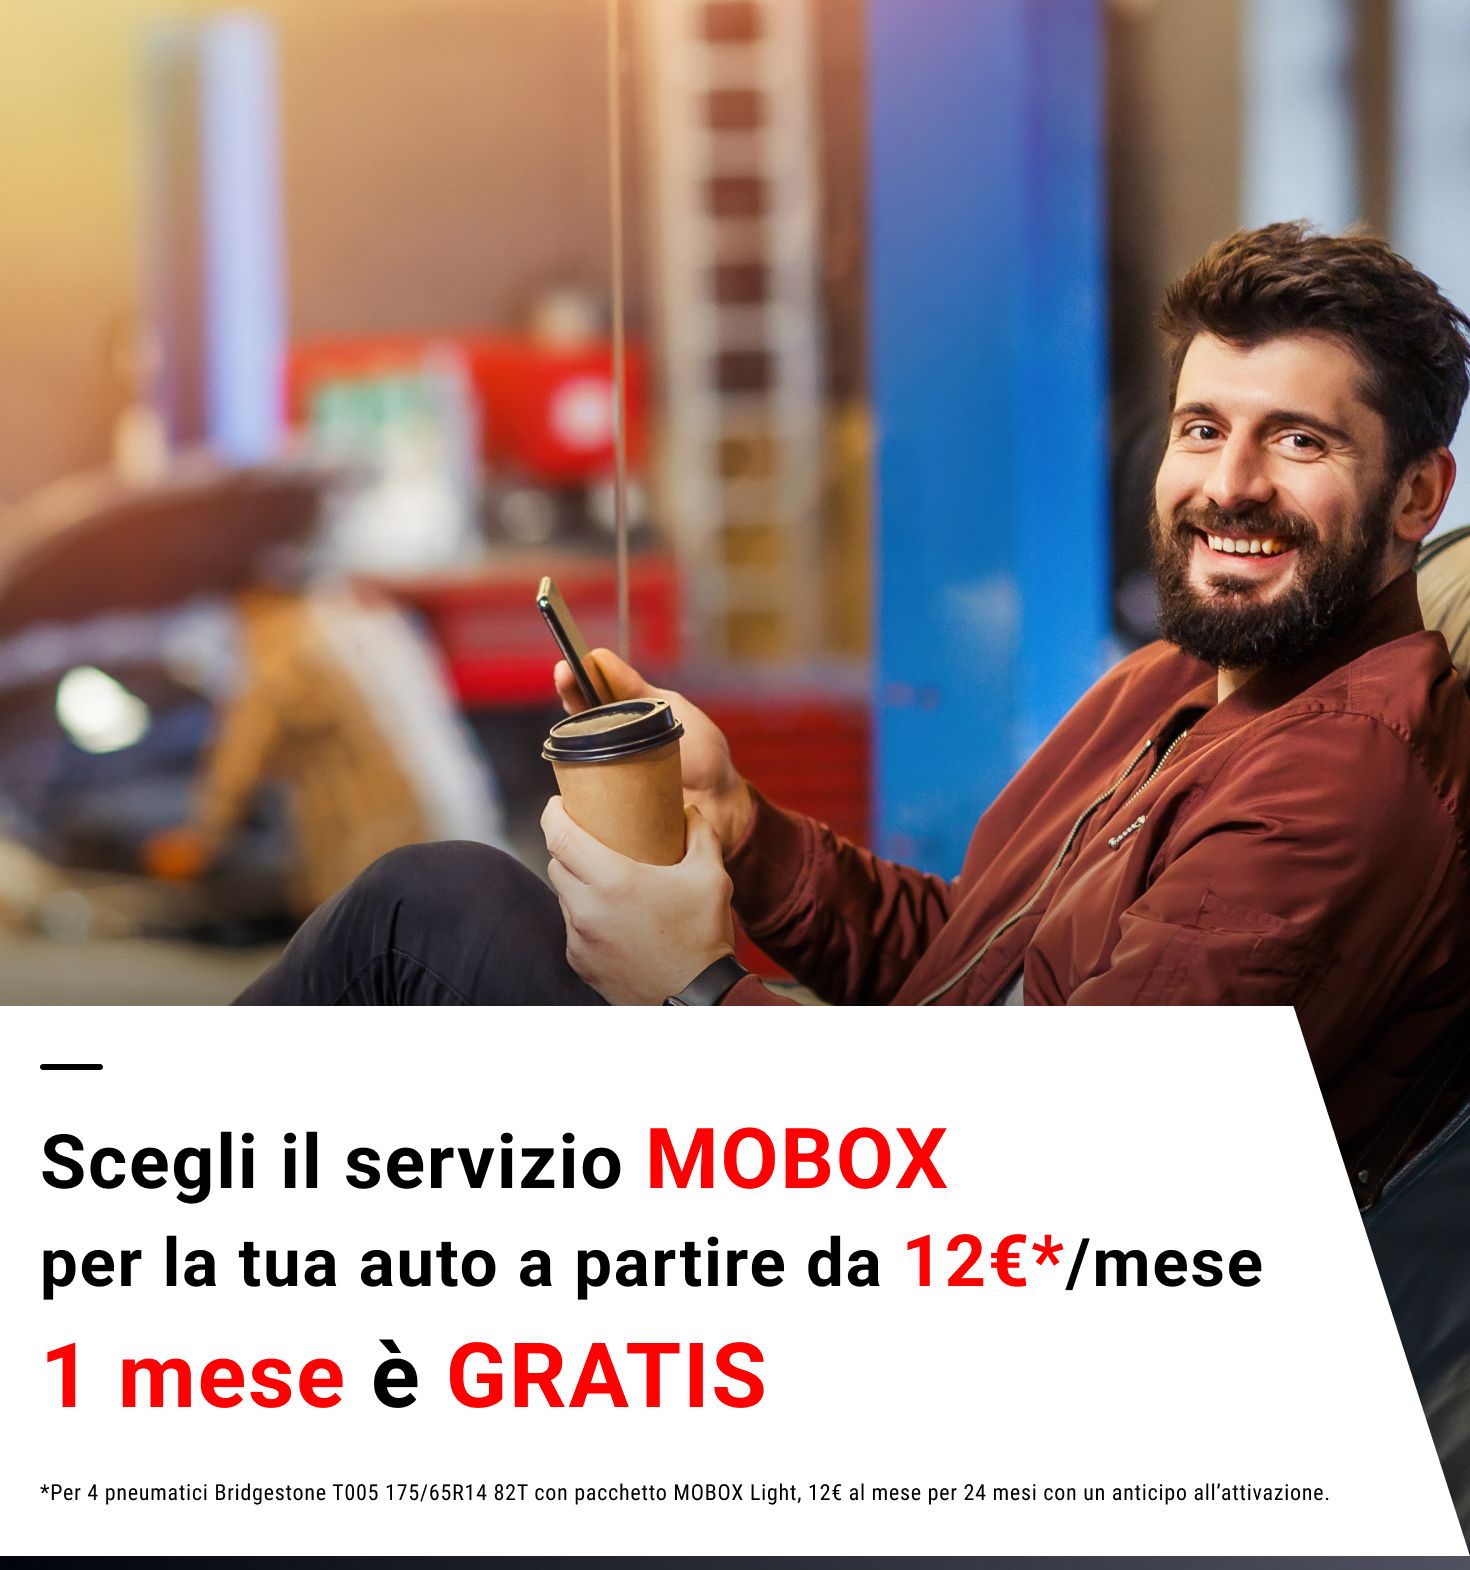 MOBOX promo Italy